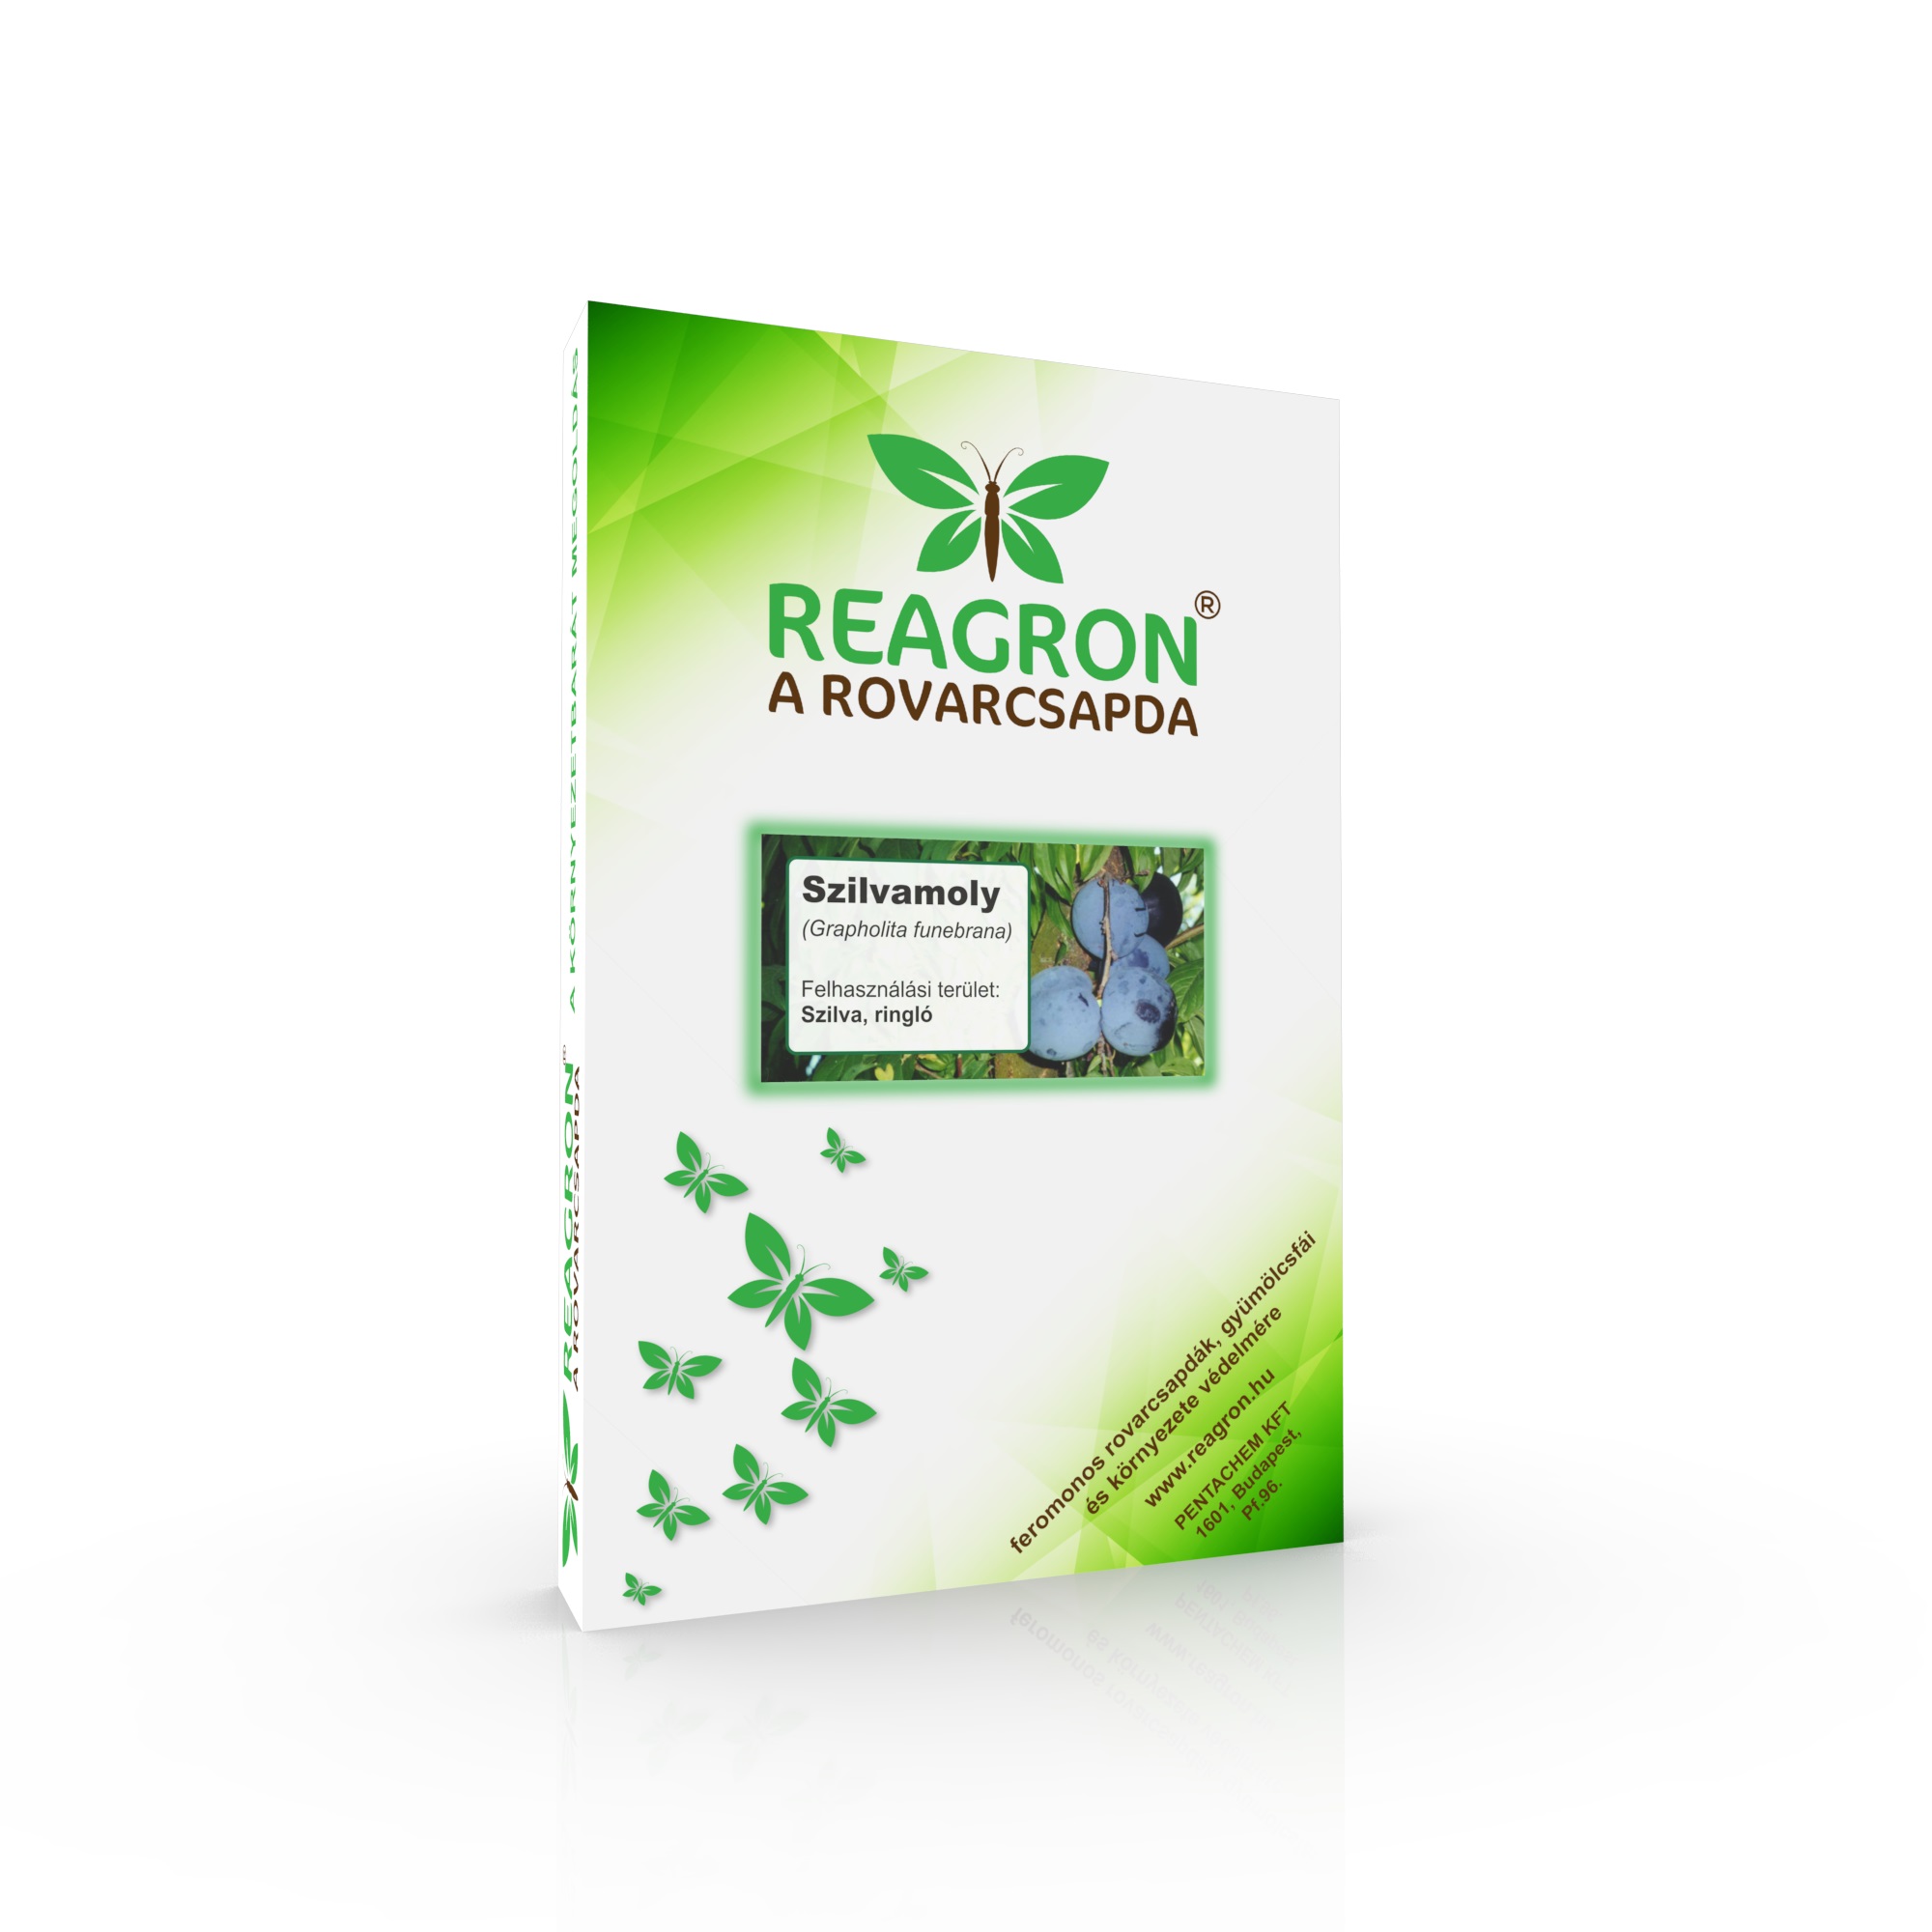 Pheromone trap Reagron Plover (Grapholita funebrana) 3 swarms